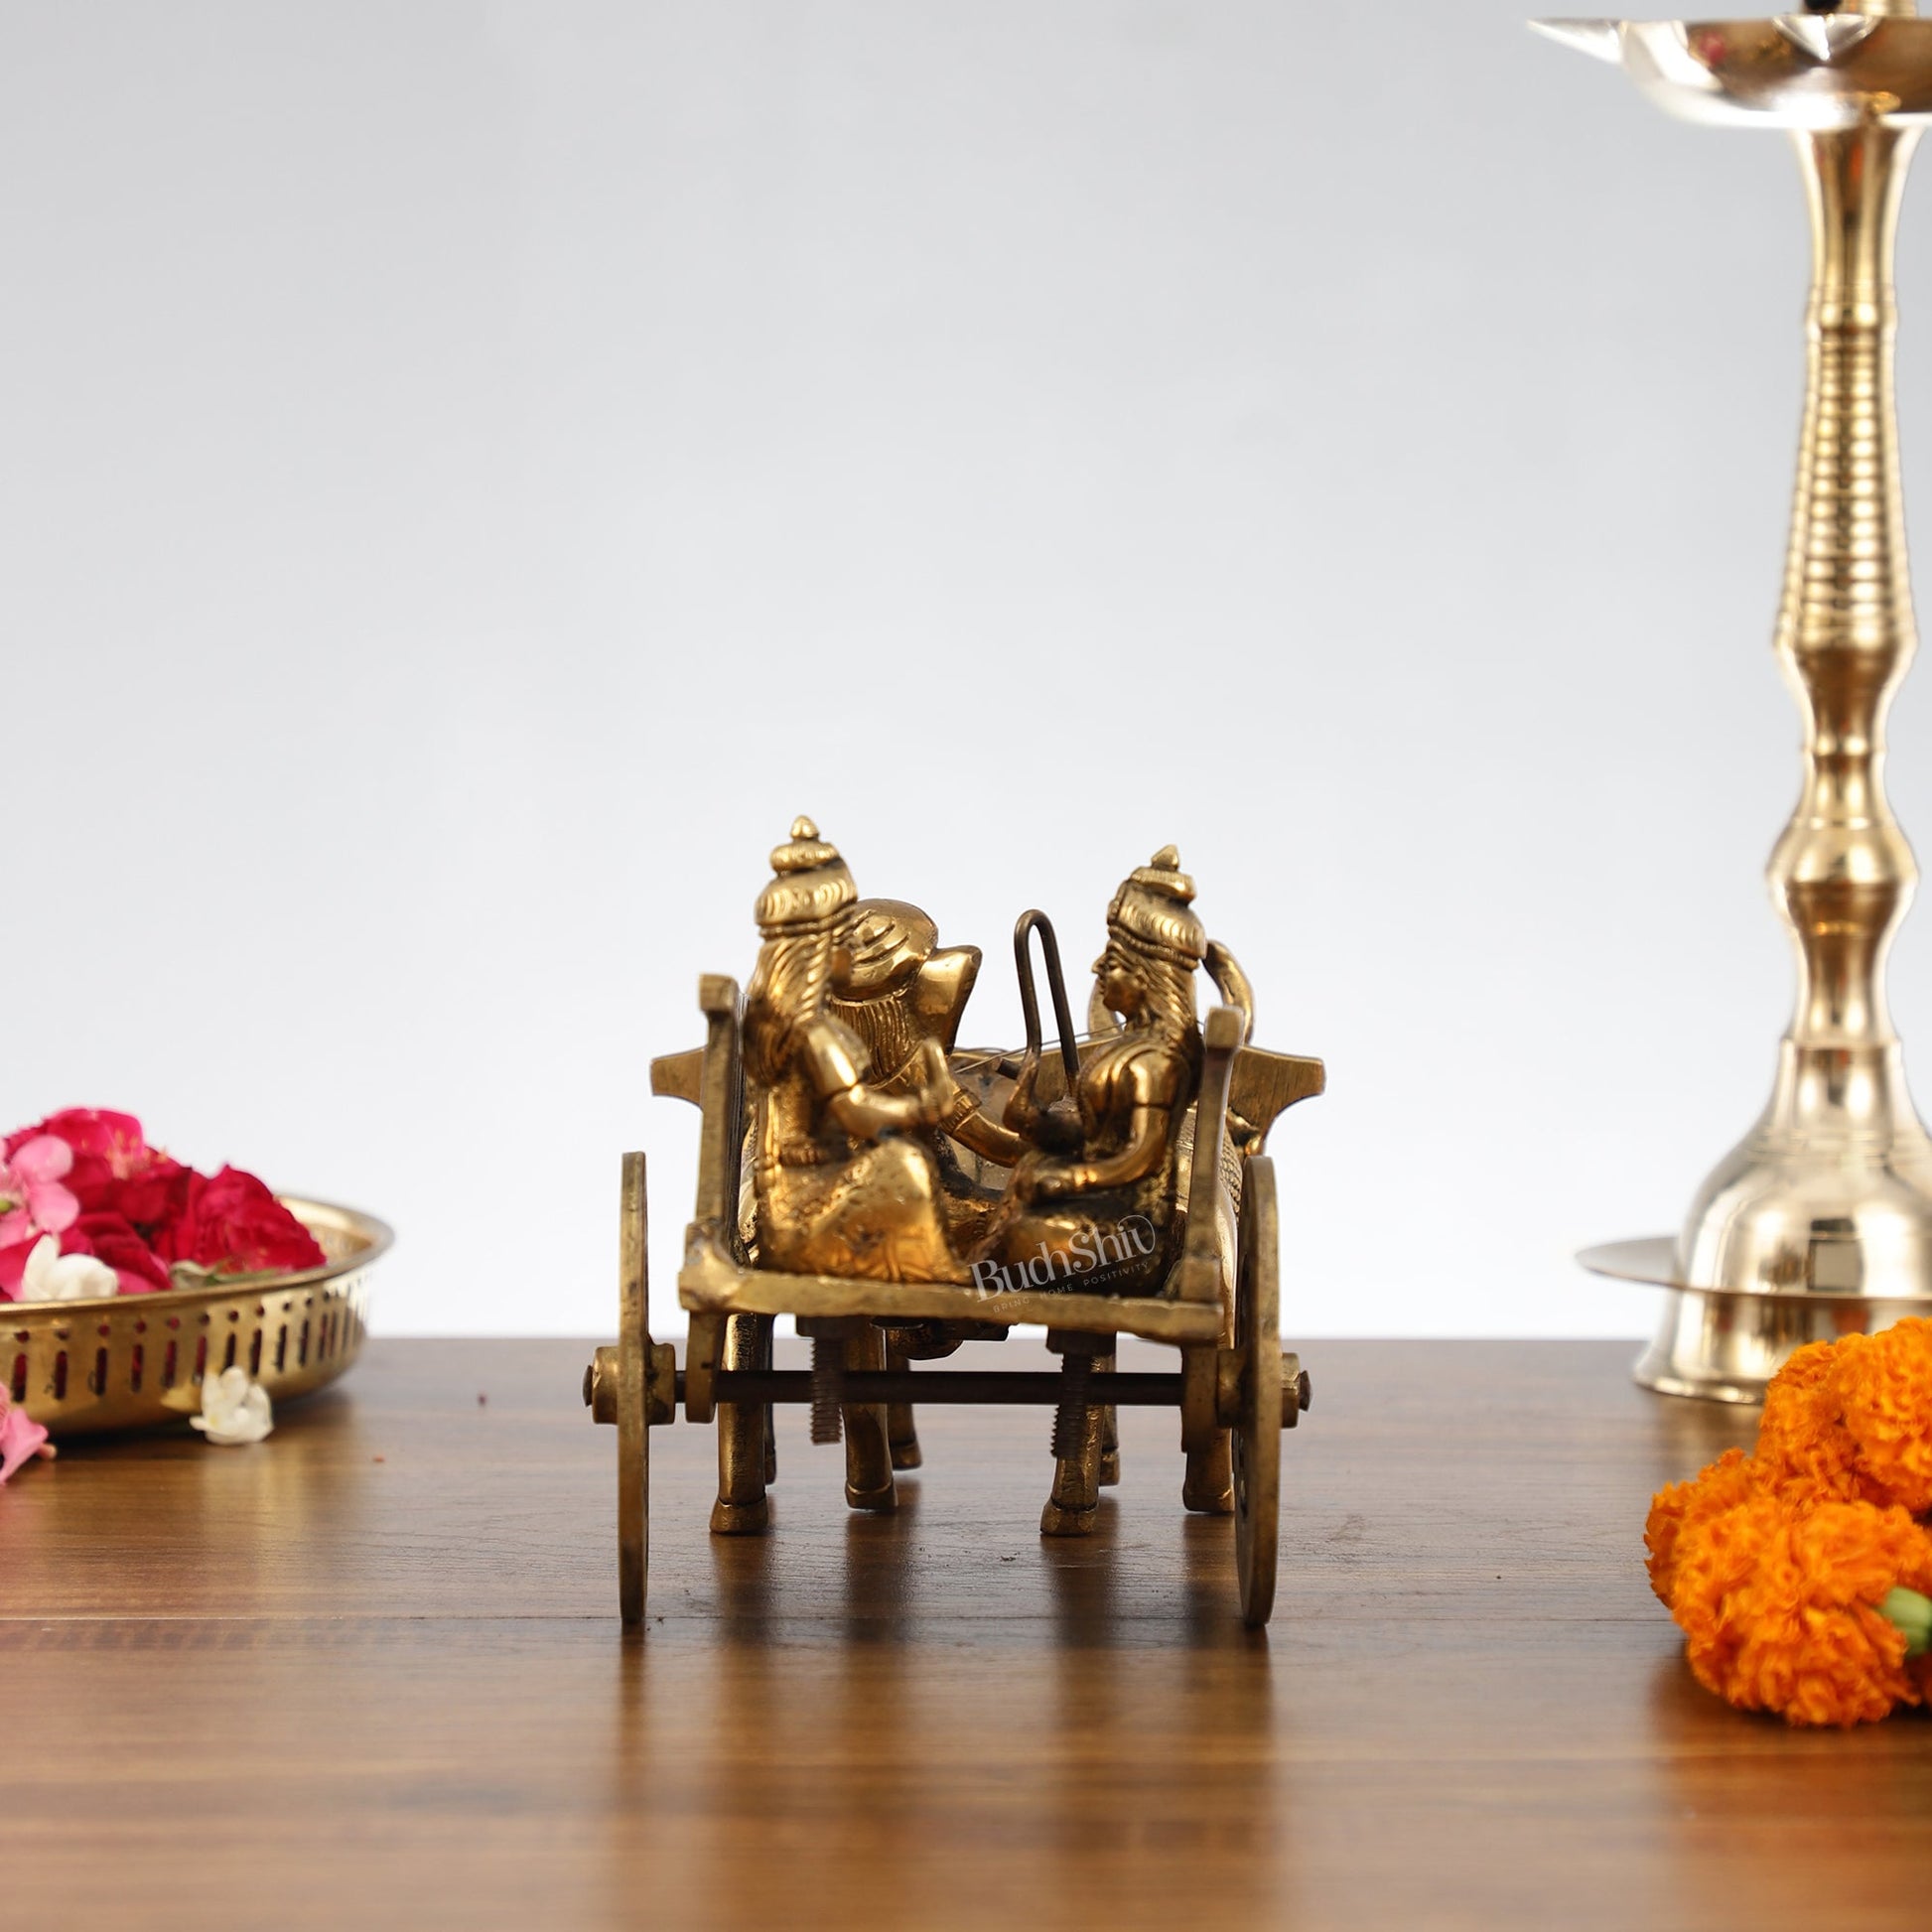 Brass Ganesha bullock cart with riddhi siddhi - Budhshiv.com